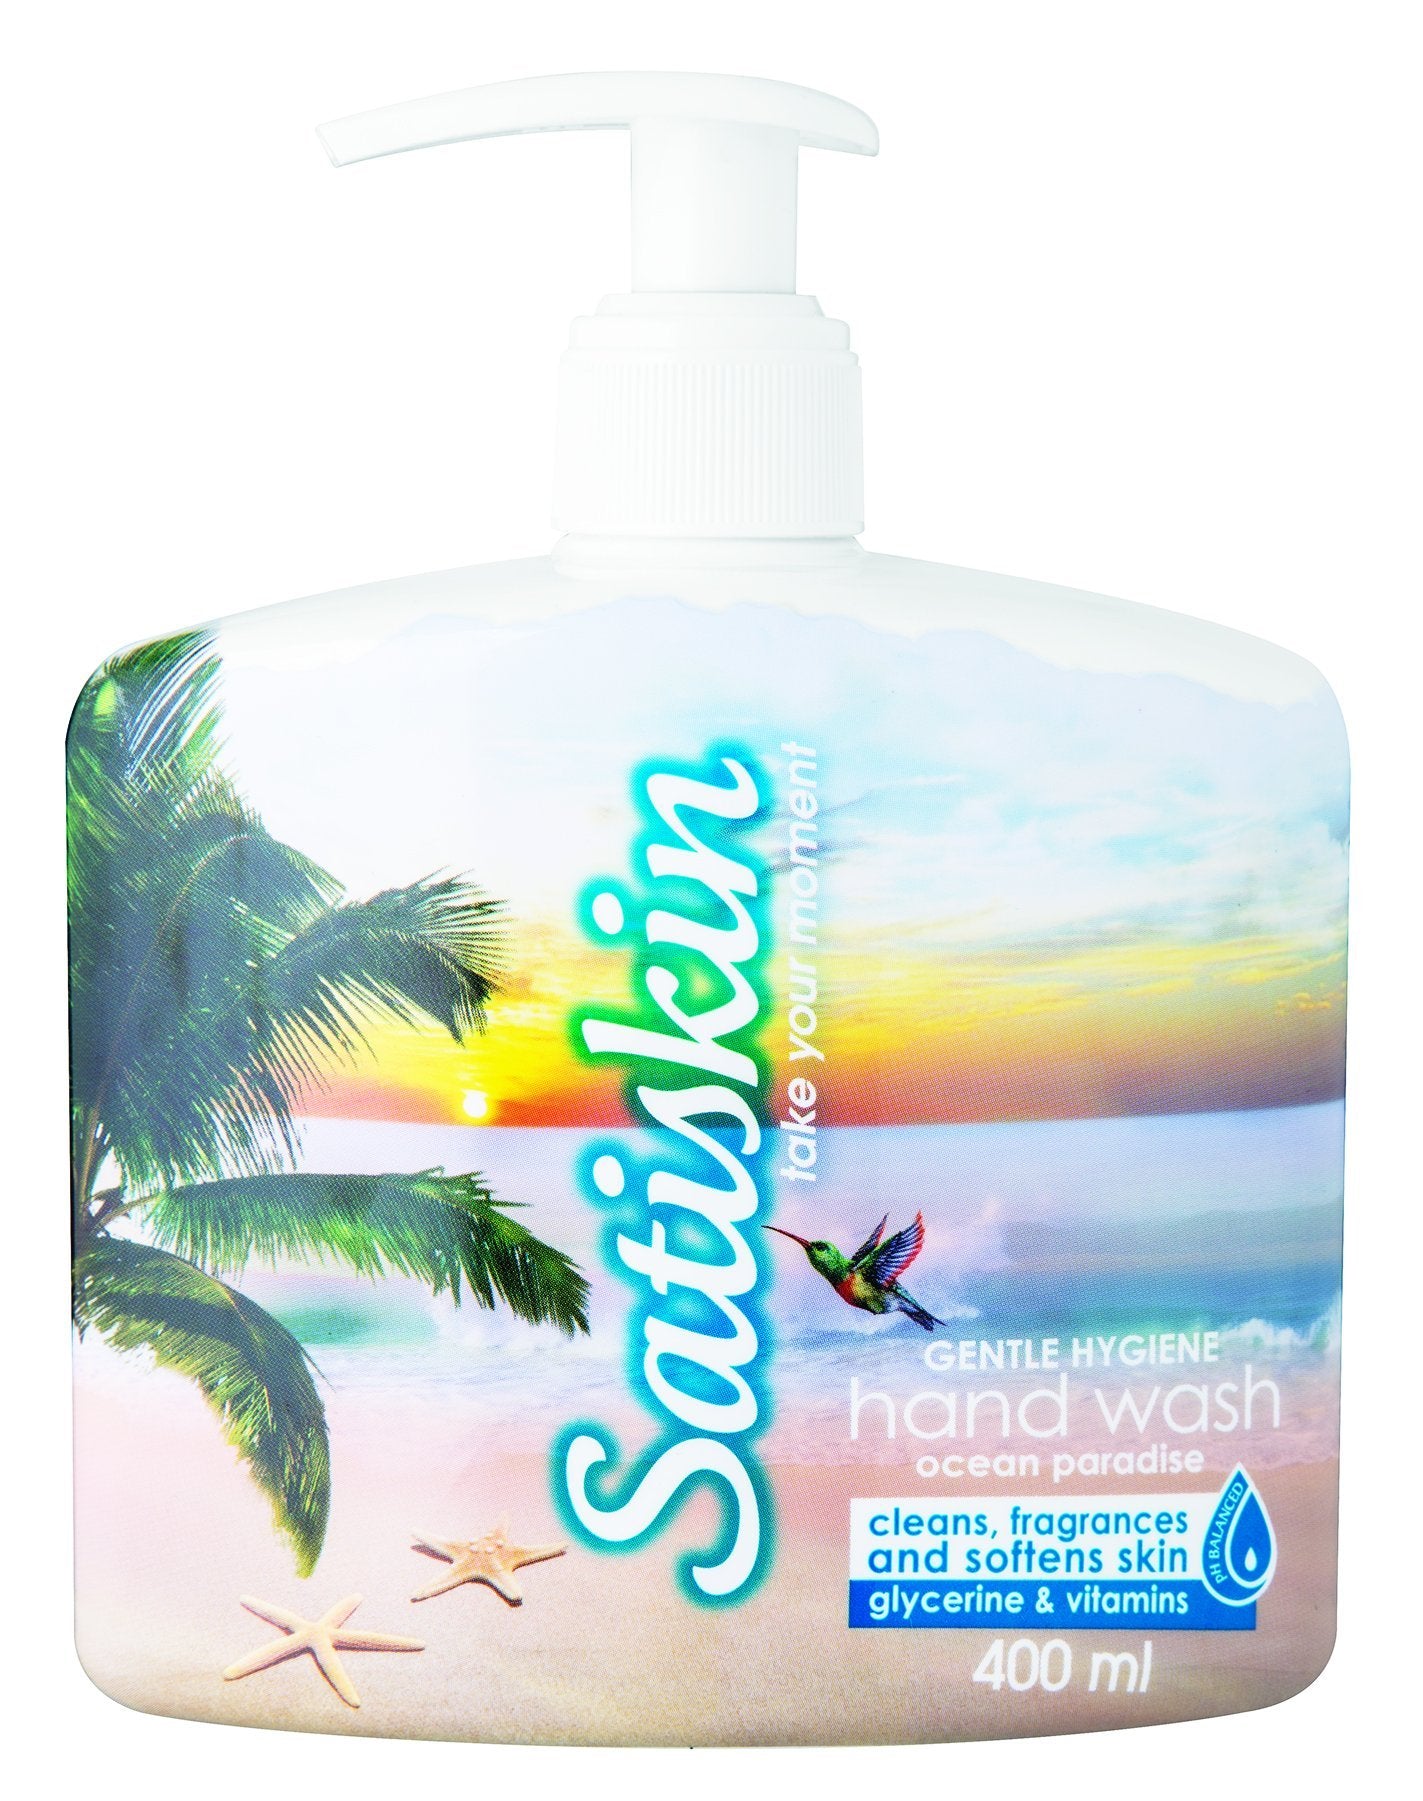 Satiskin Hand Wash - Ocean Paradise - 400ml 12-Pack